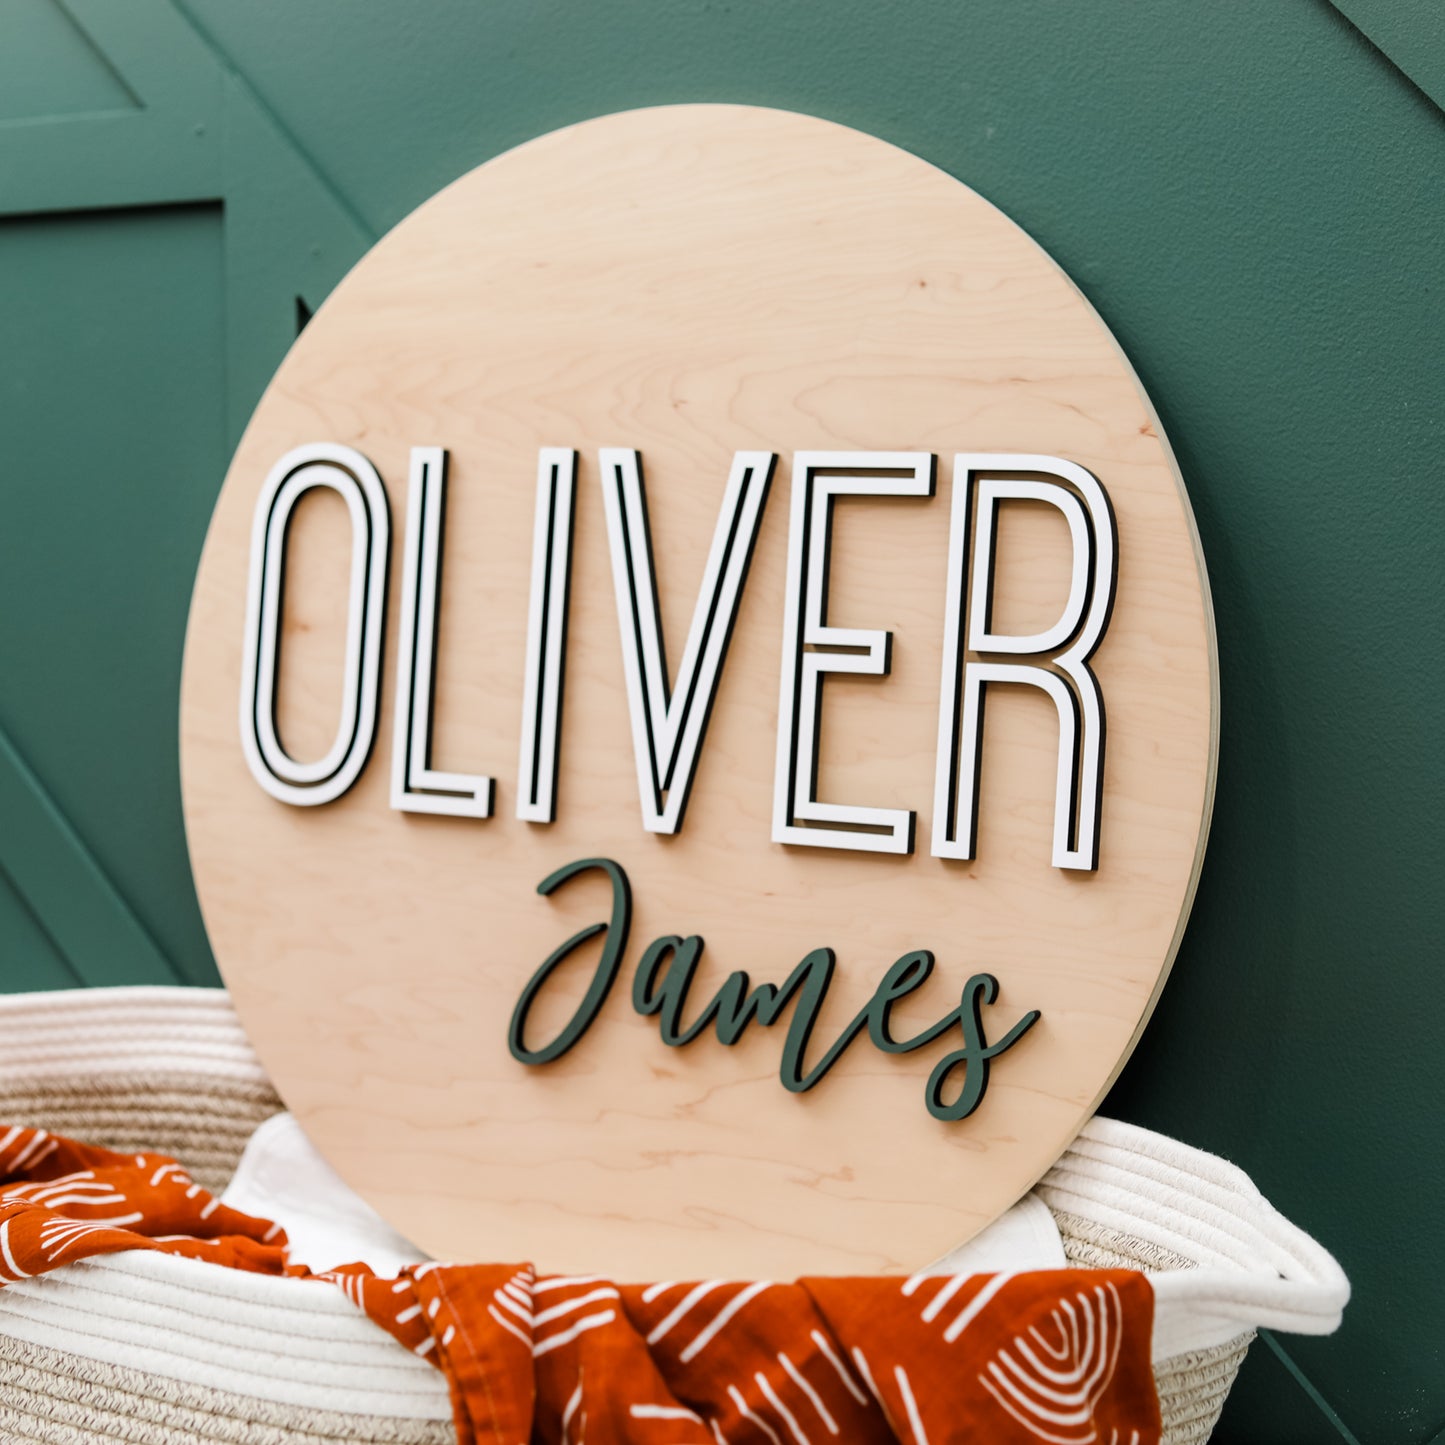 Oliver James Round Name Sign